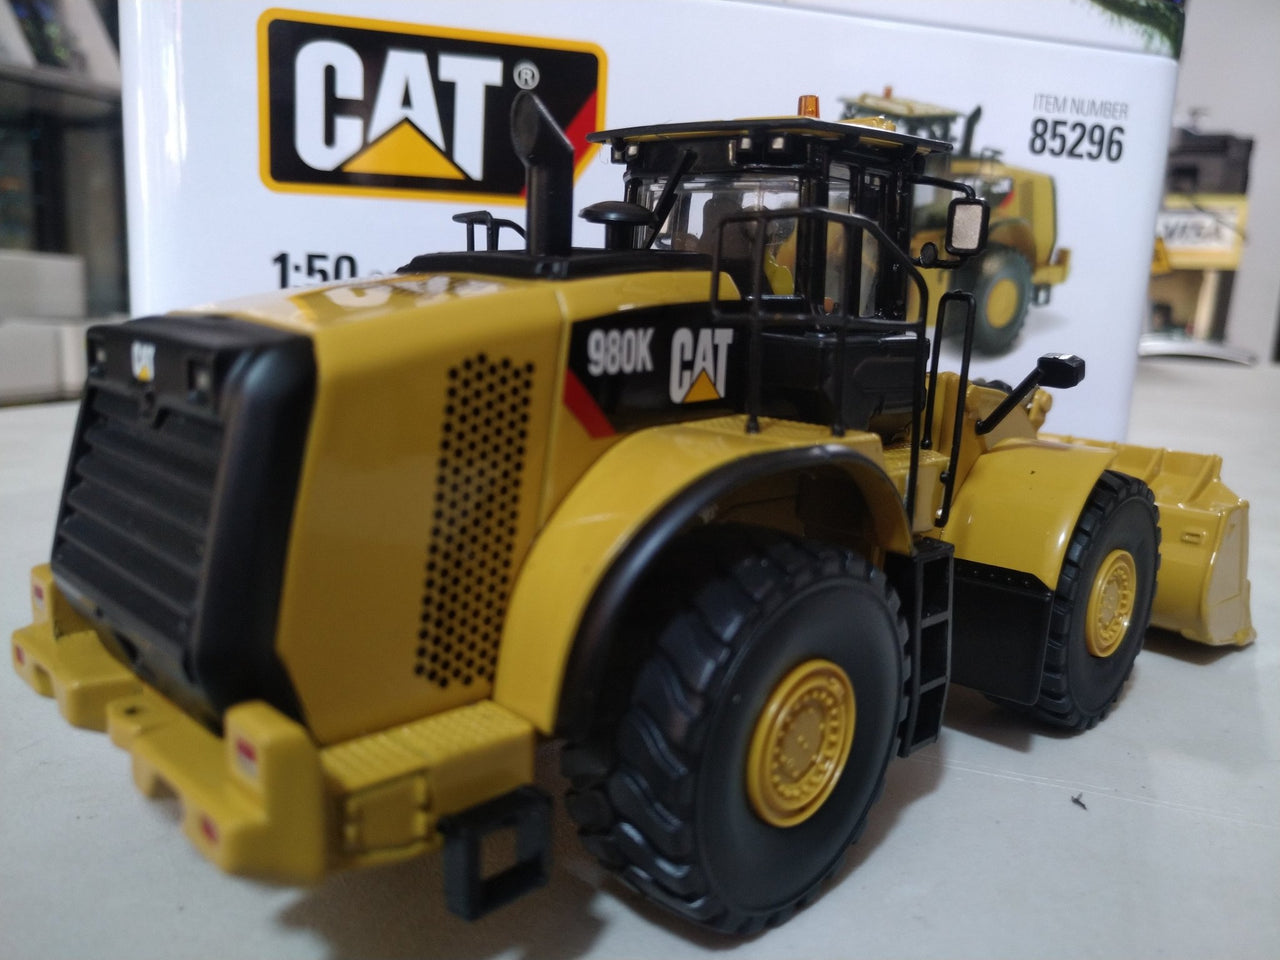 85296 Caterpillar 980K Wheel Loader 1:50 Scale (Discontinued Model)